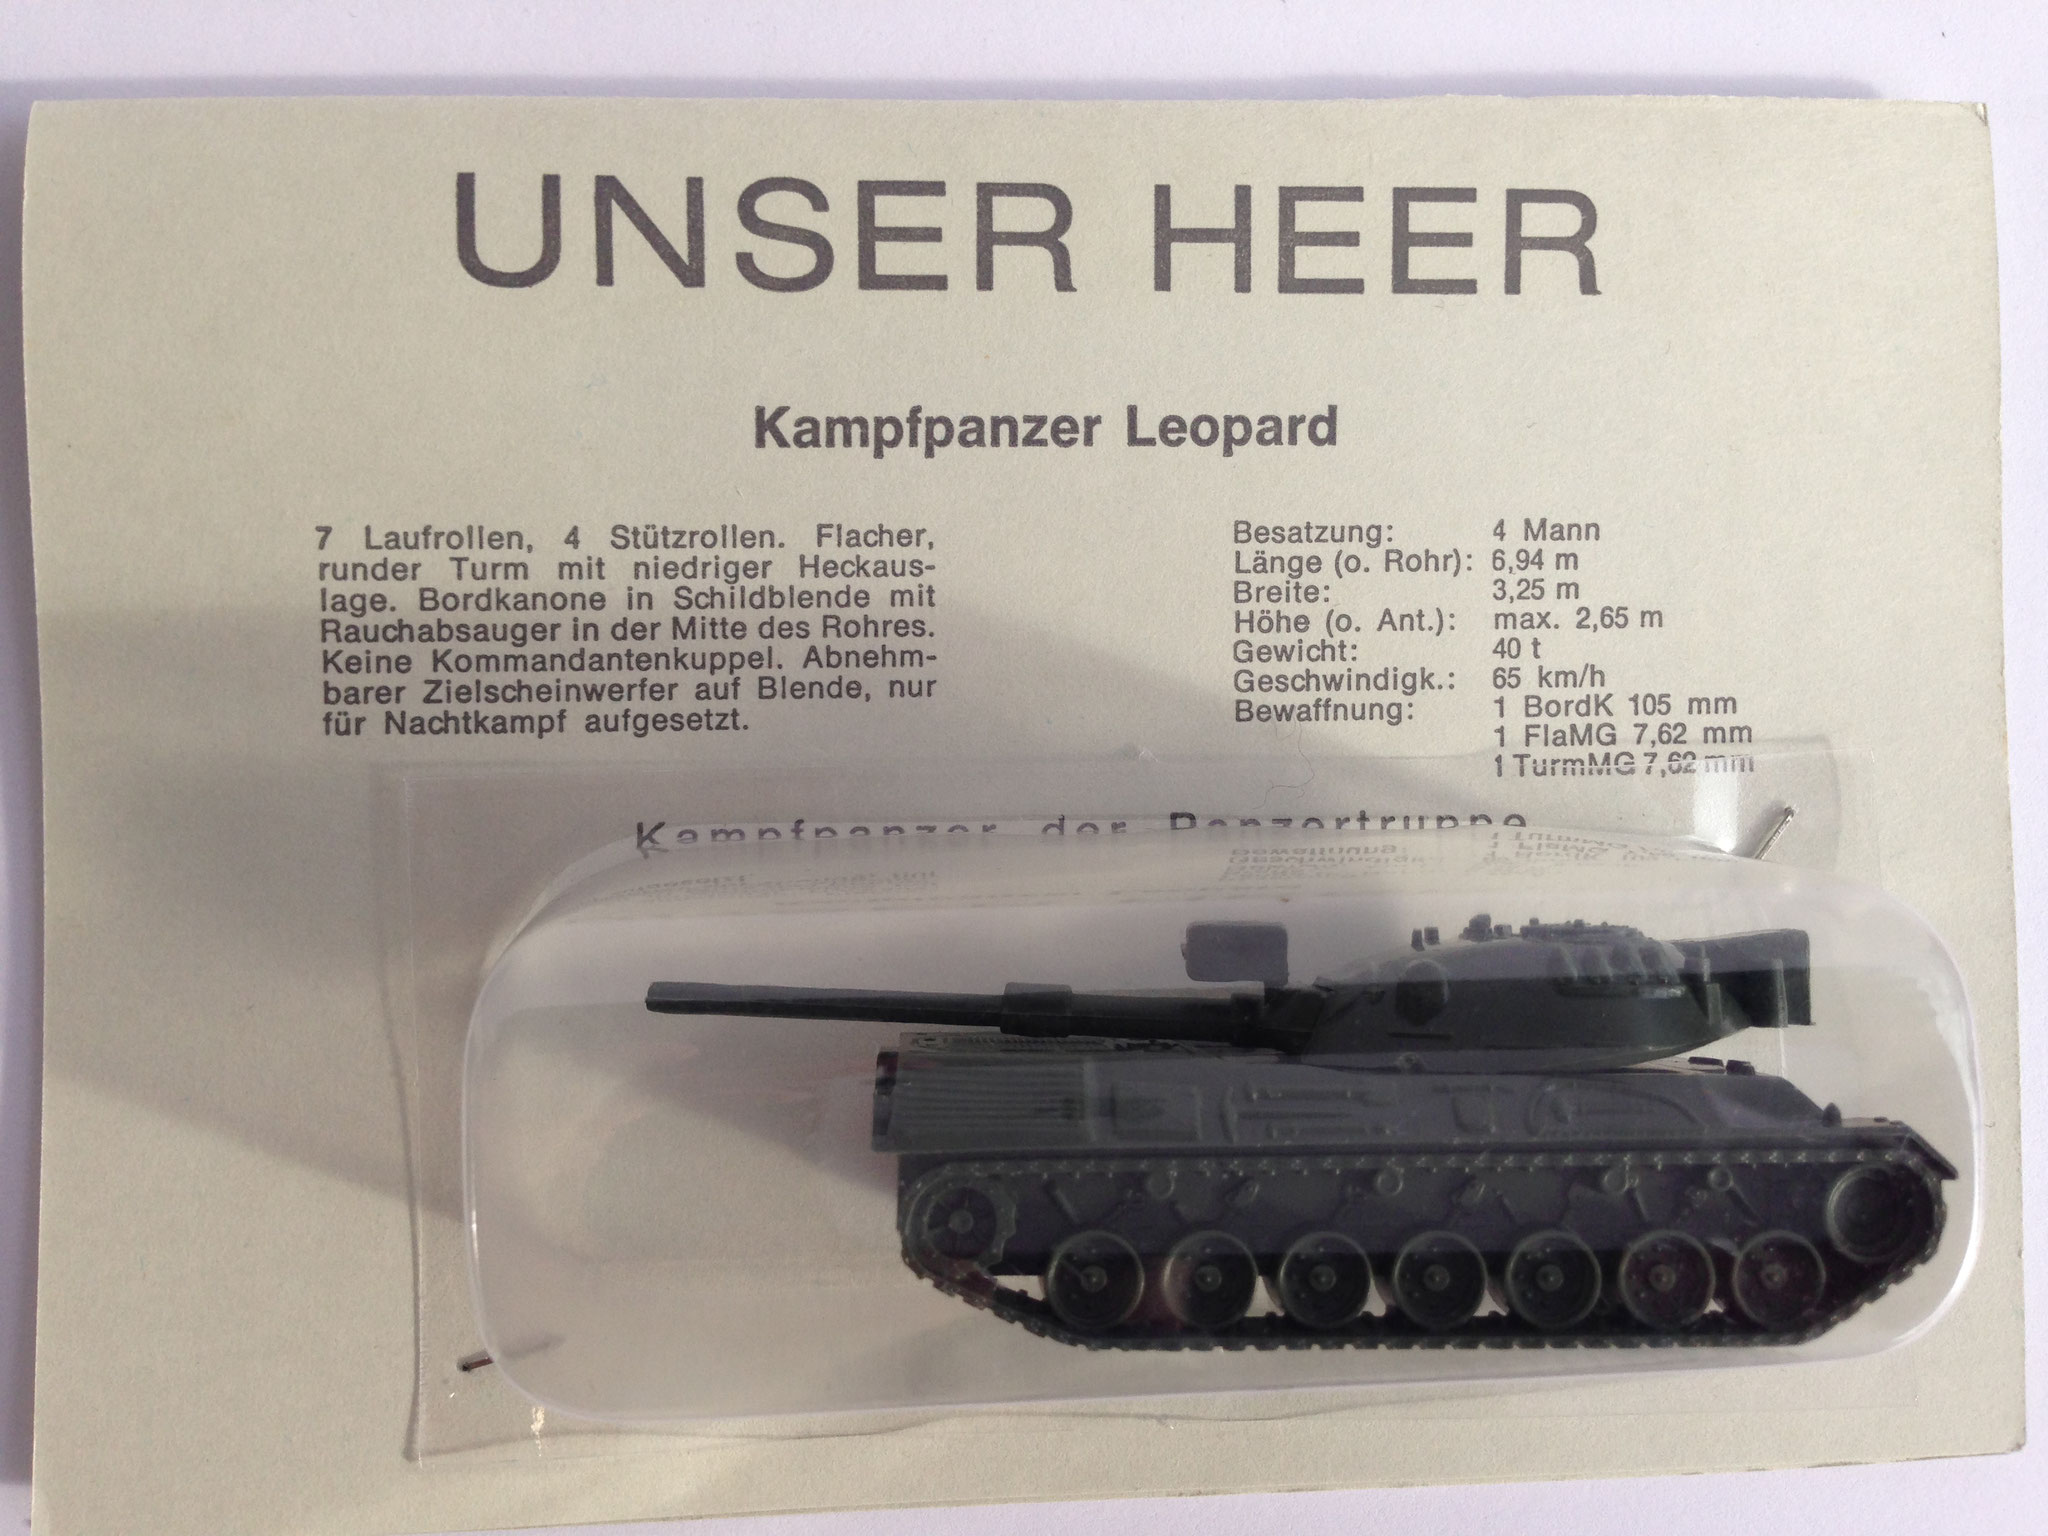 Unser Heer "Kampfpanzer Leo"